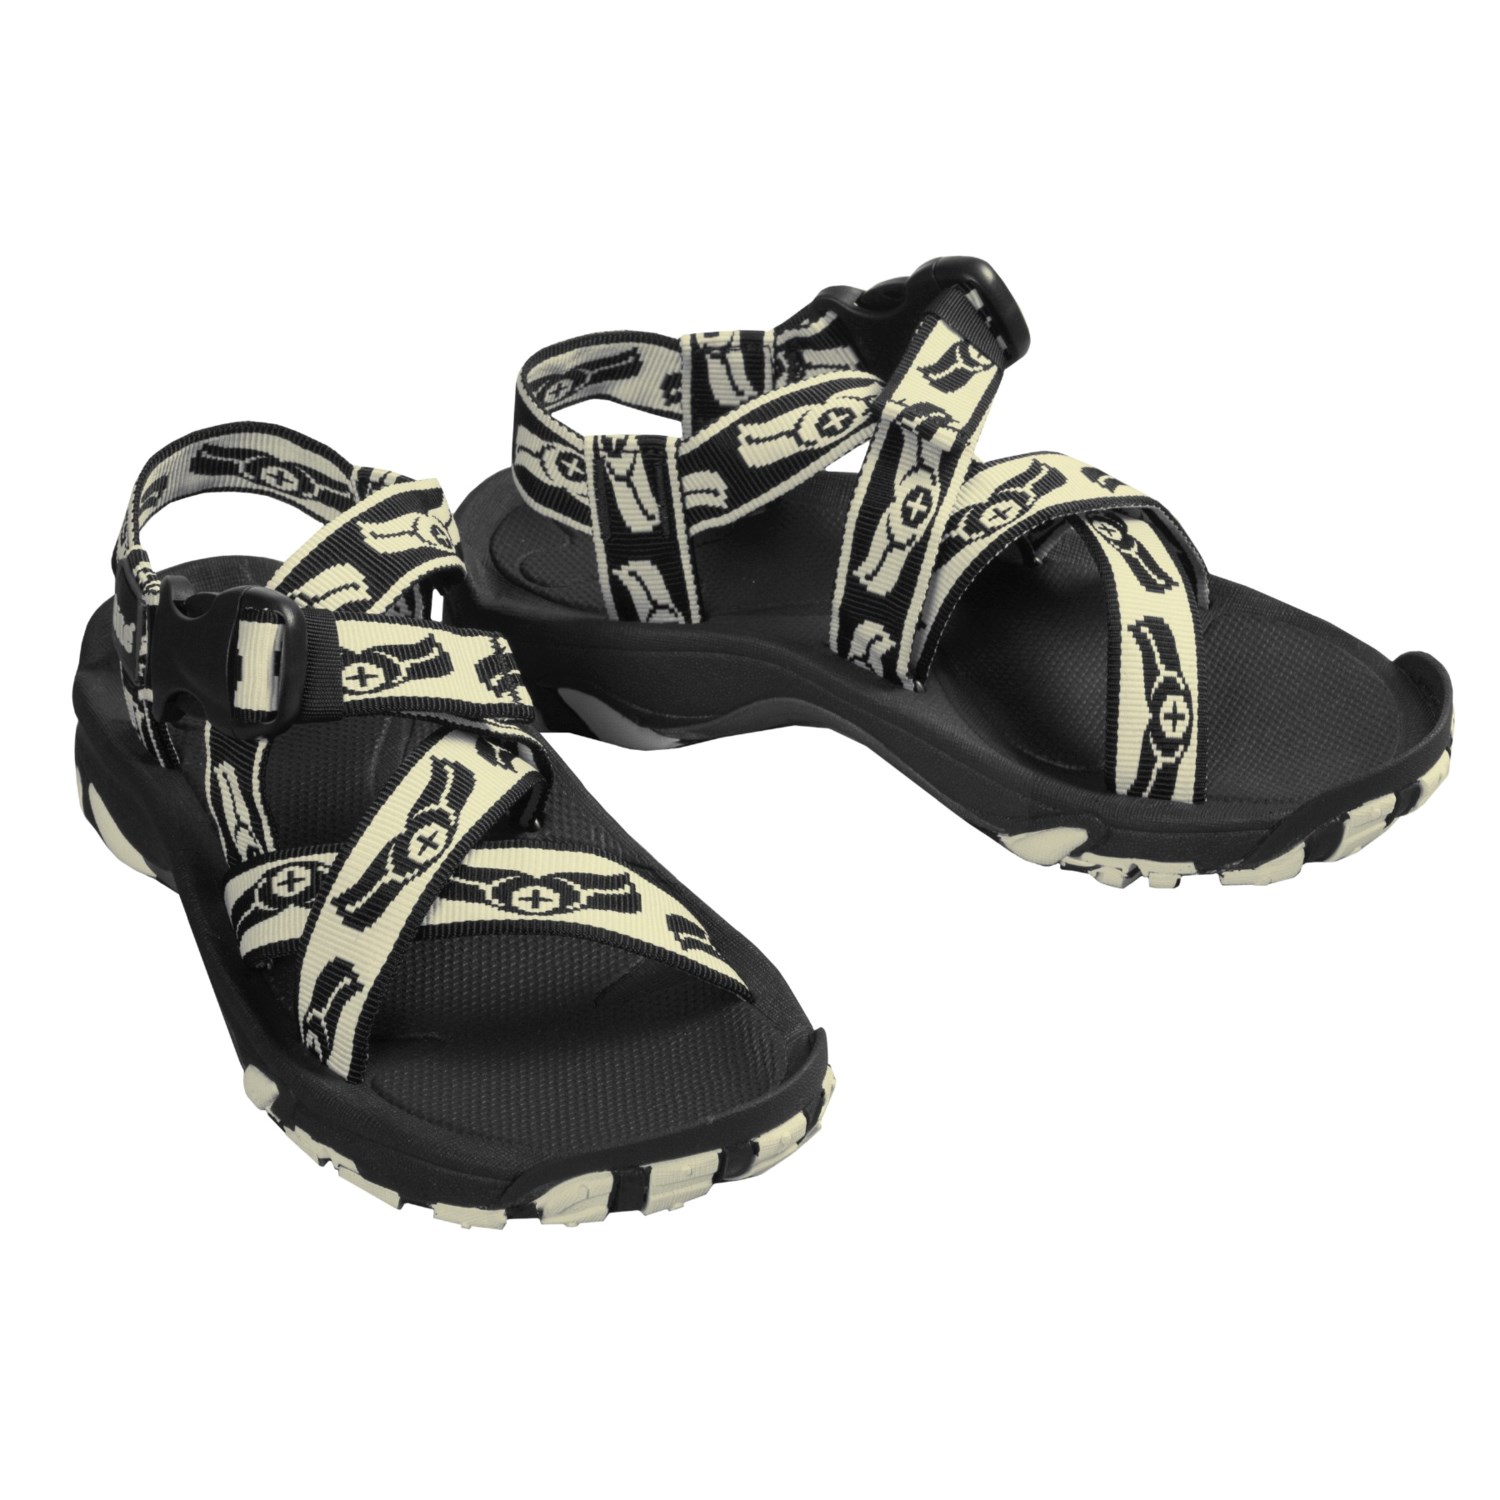 Bite Enerstrap Running Sandals (For Women) 96141 - Save 57%